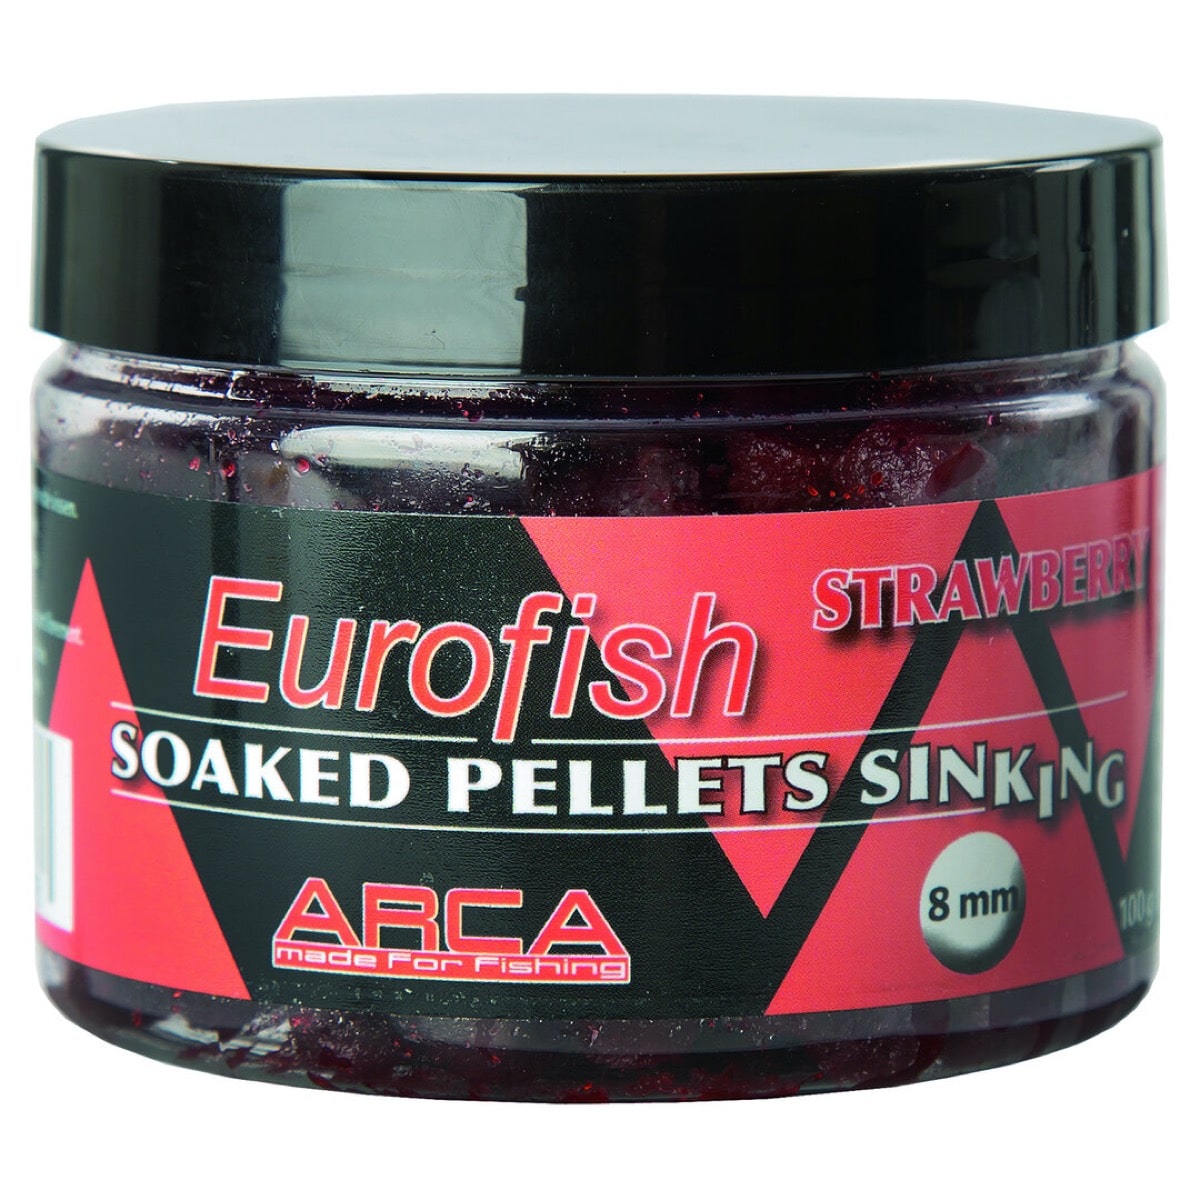 Eurofish soaked pellets sinking 8mm strawberry